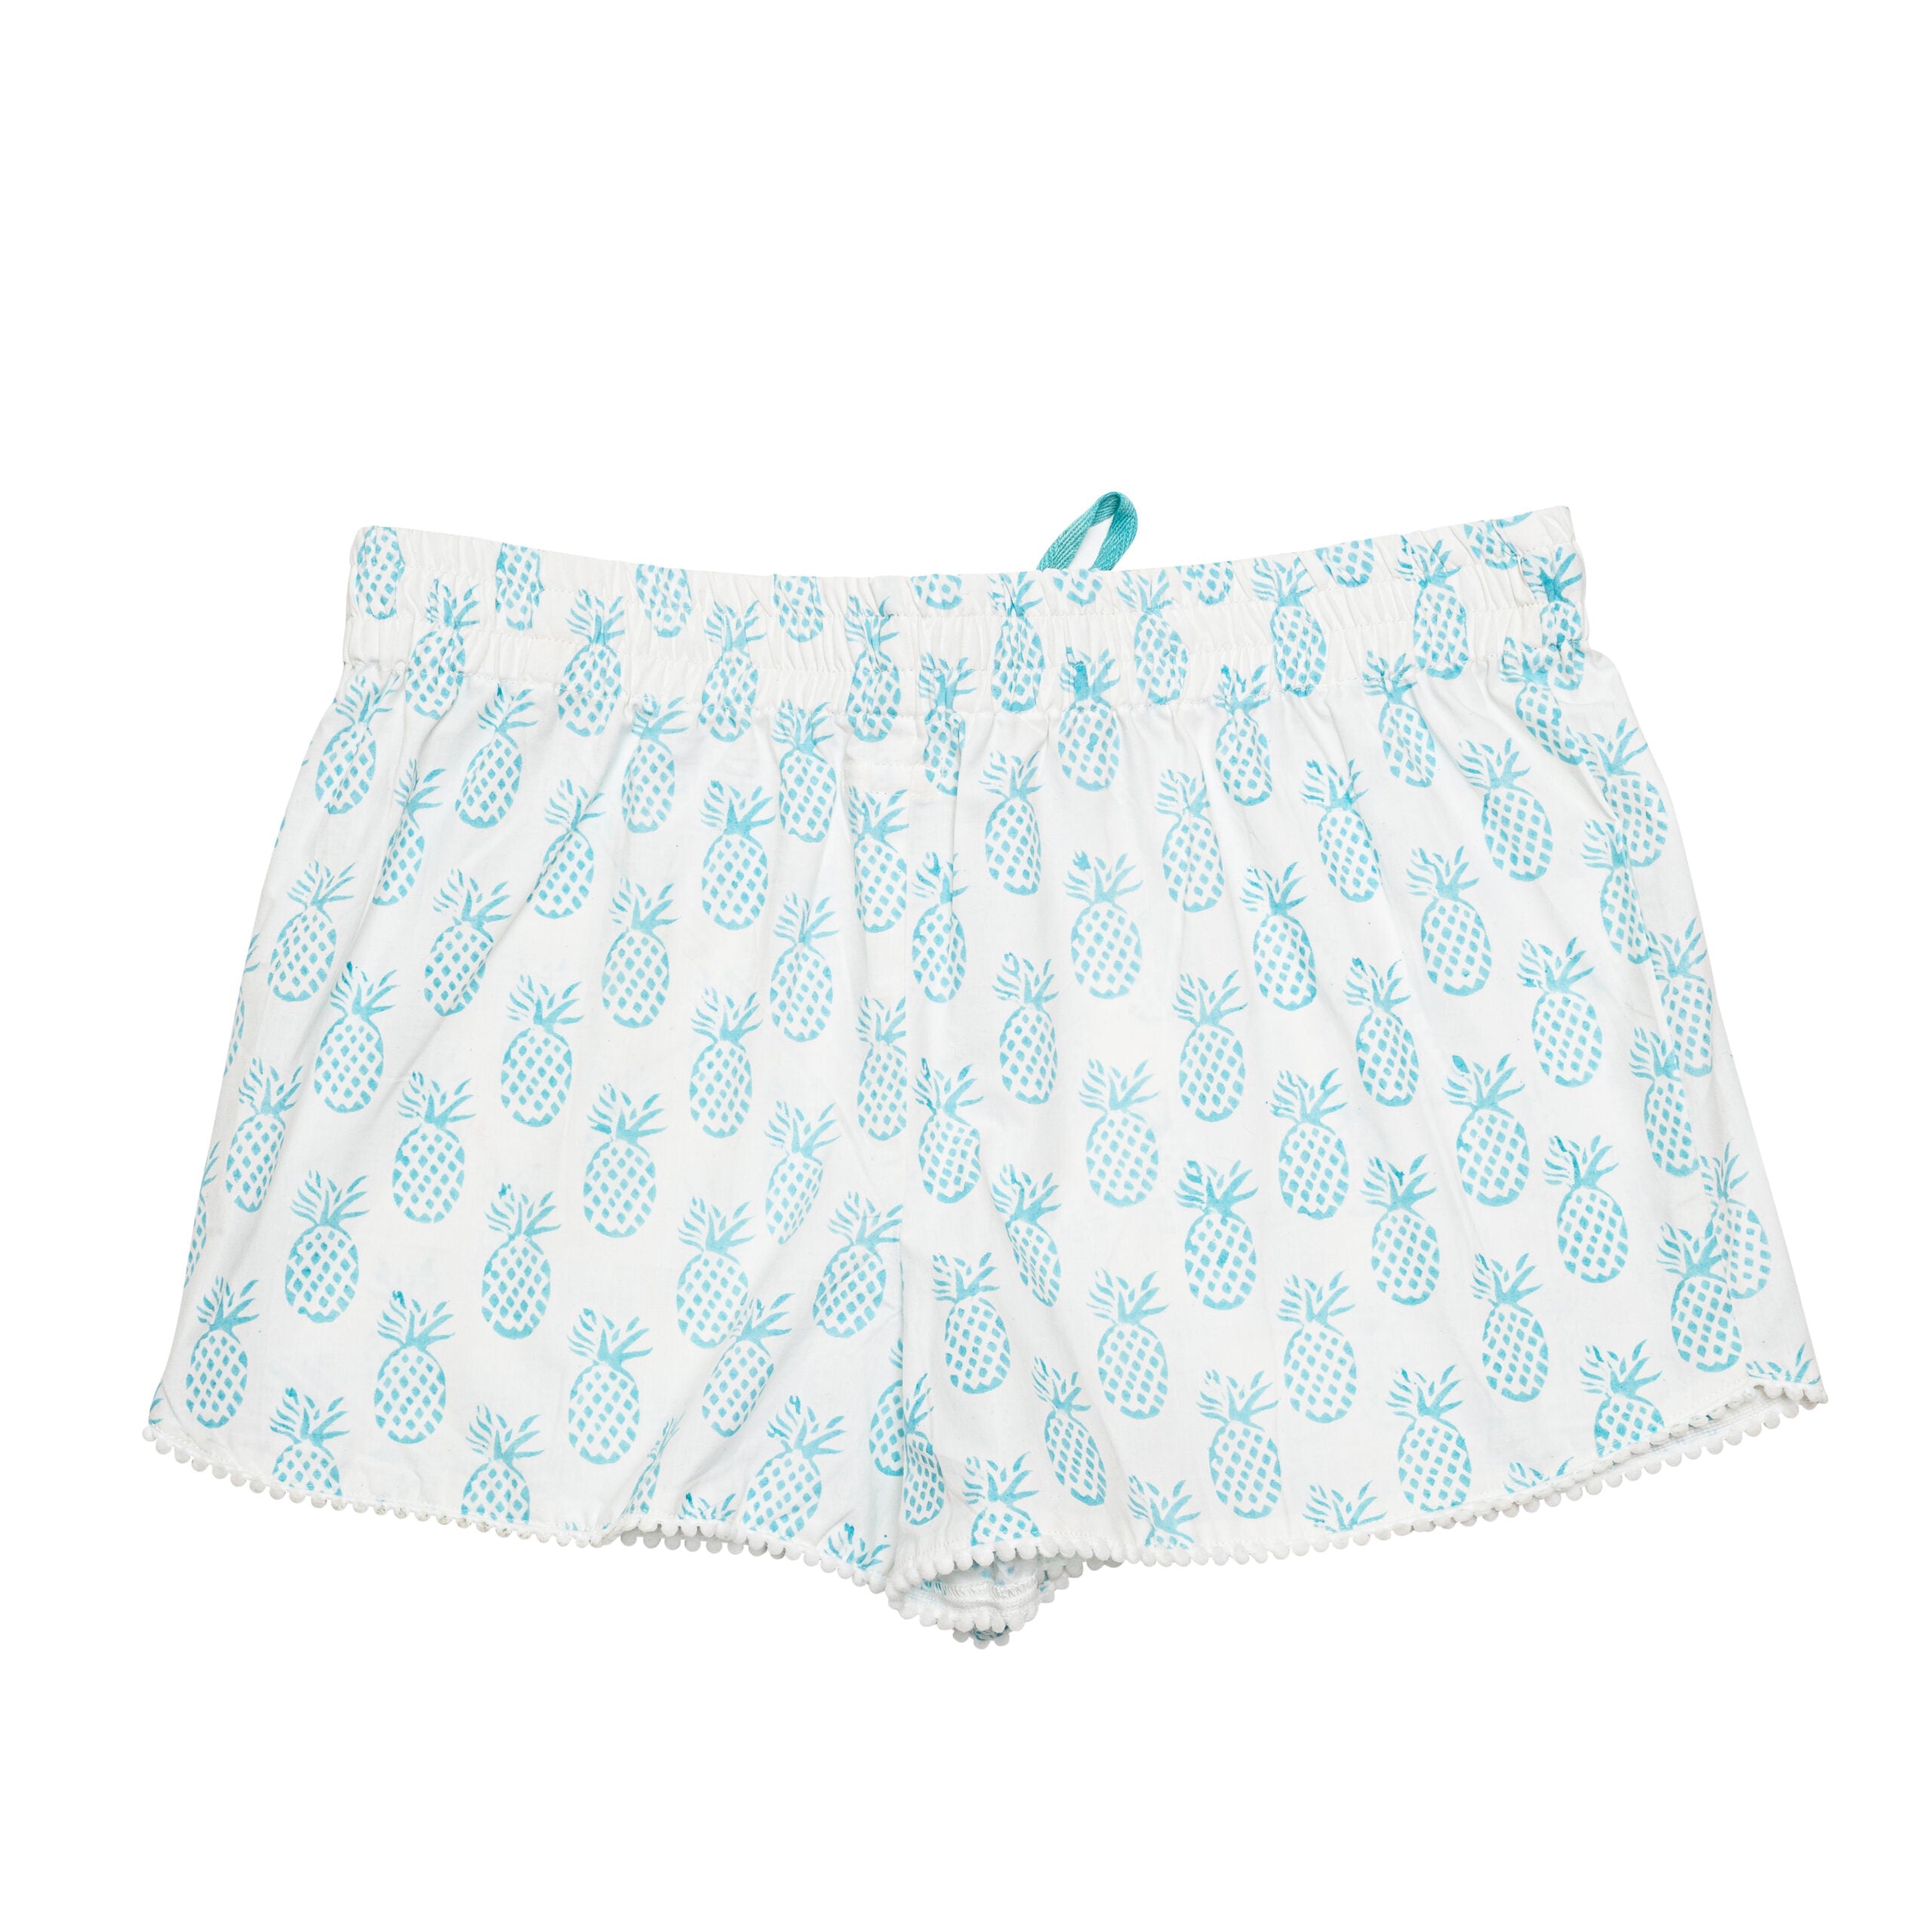 Aqua Pineapple Bed Shorts